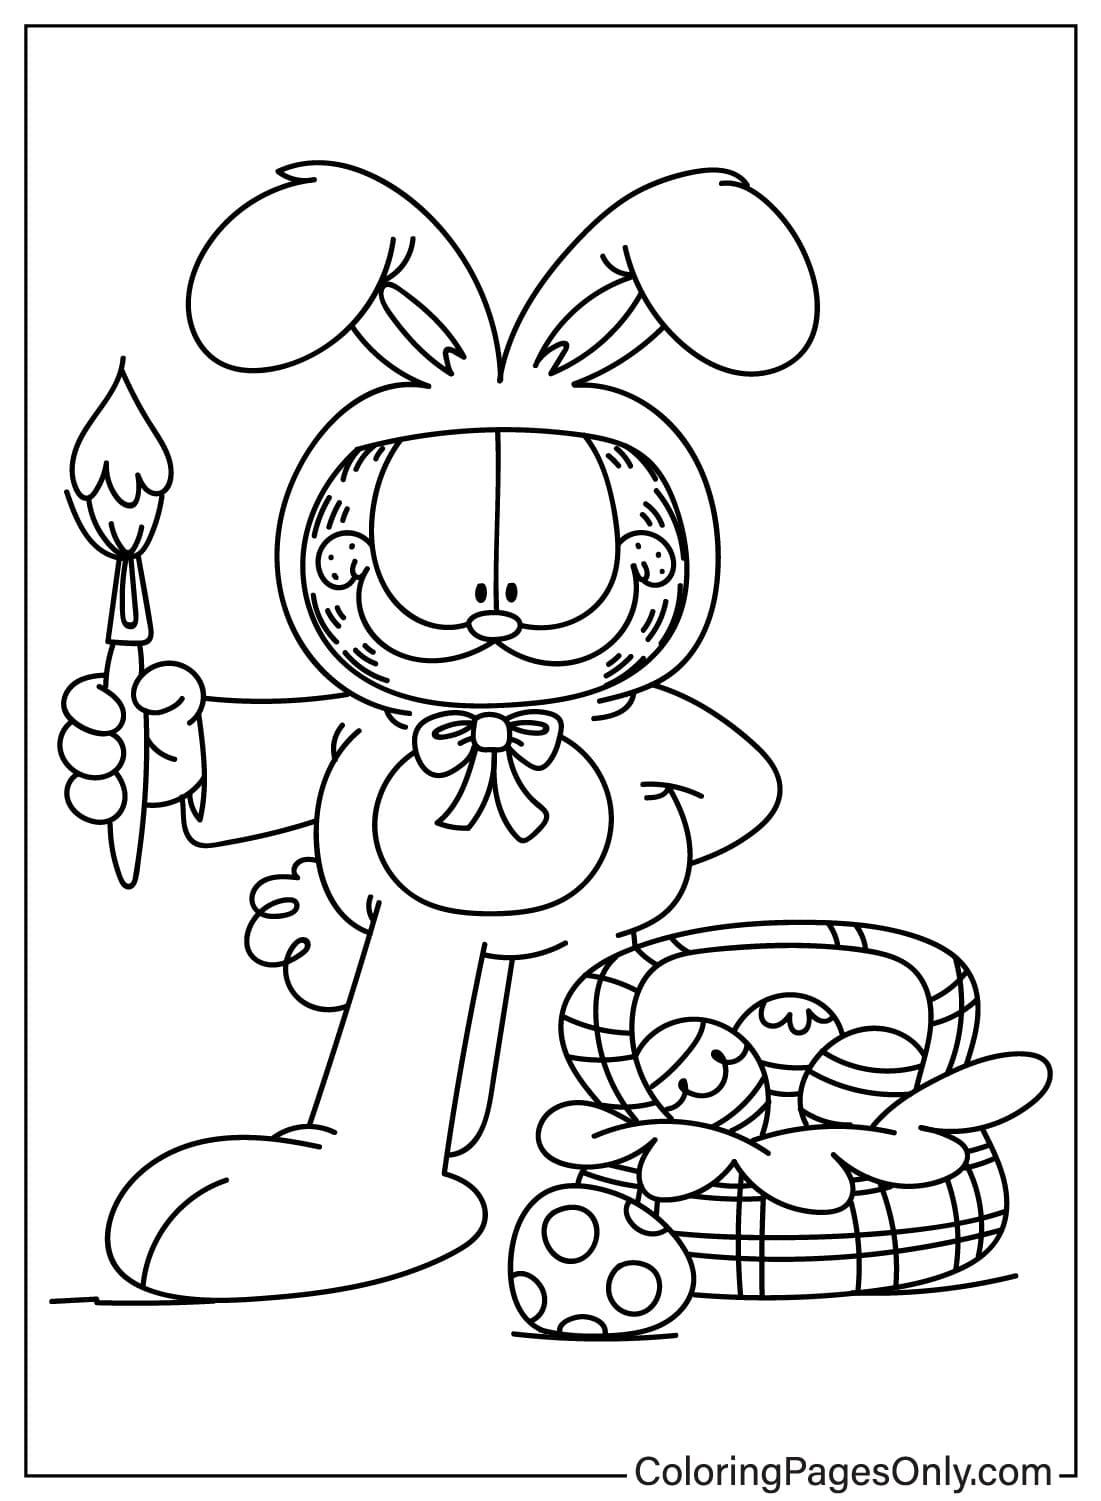 Página para colorear de dibujos animados de Pascua gratis de Easter Cartoon